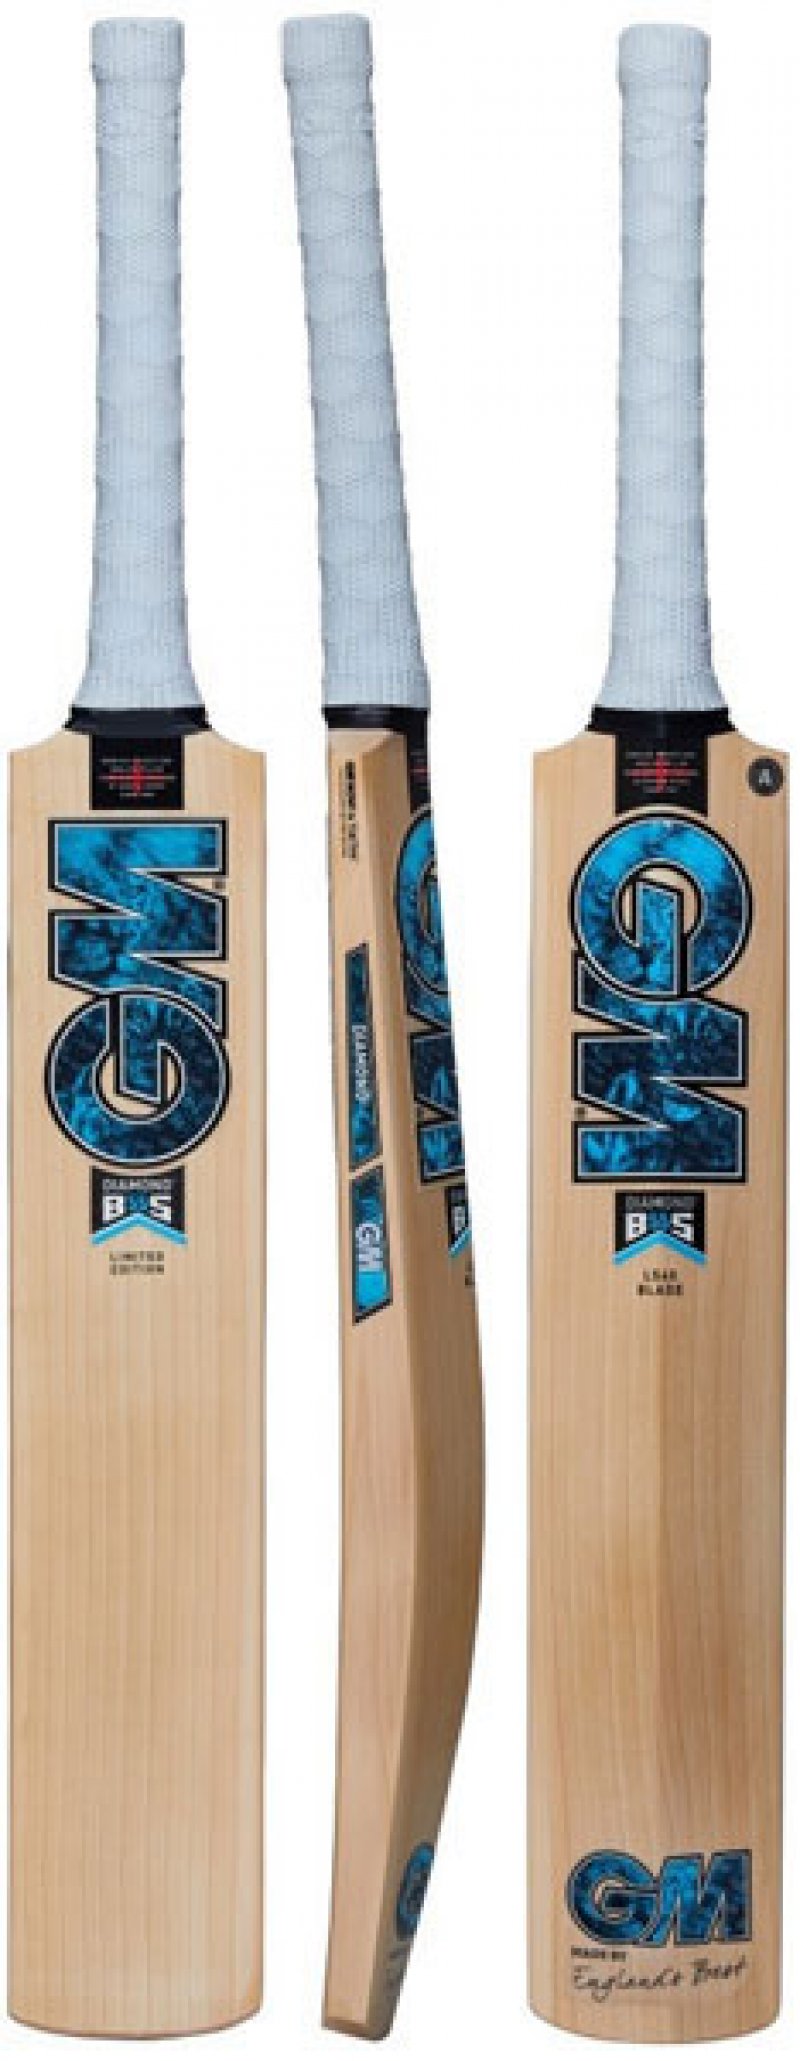 Gunn and Moore Diamond L540 DXM 808 Cricket Bat